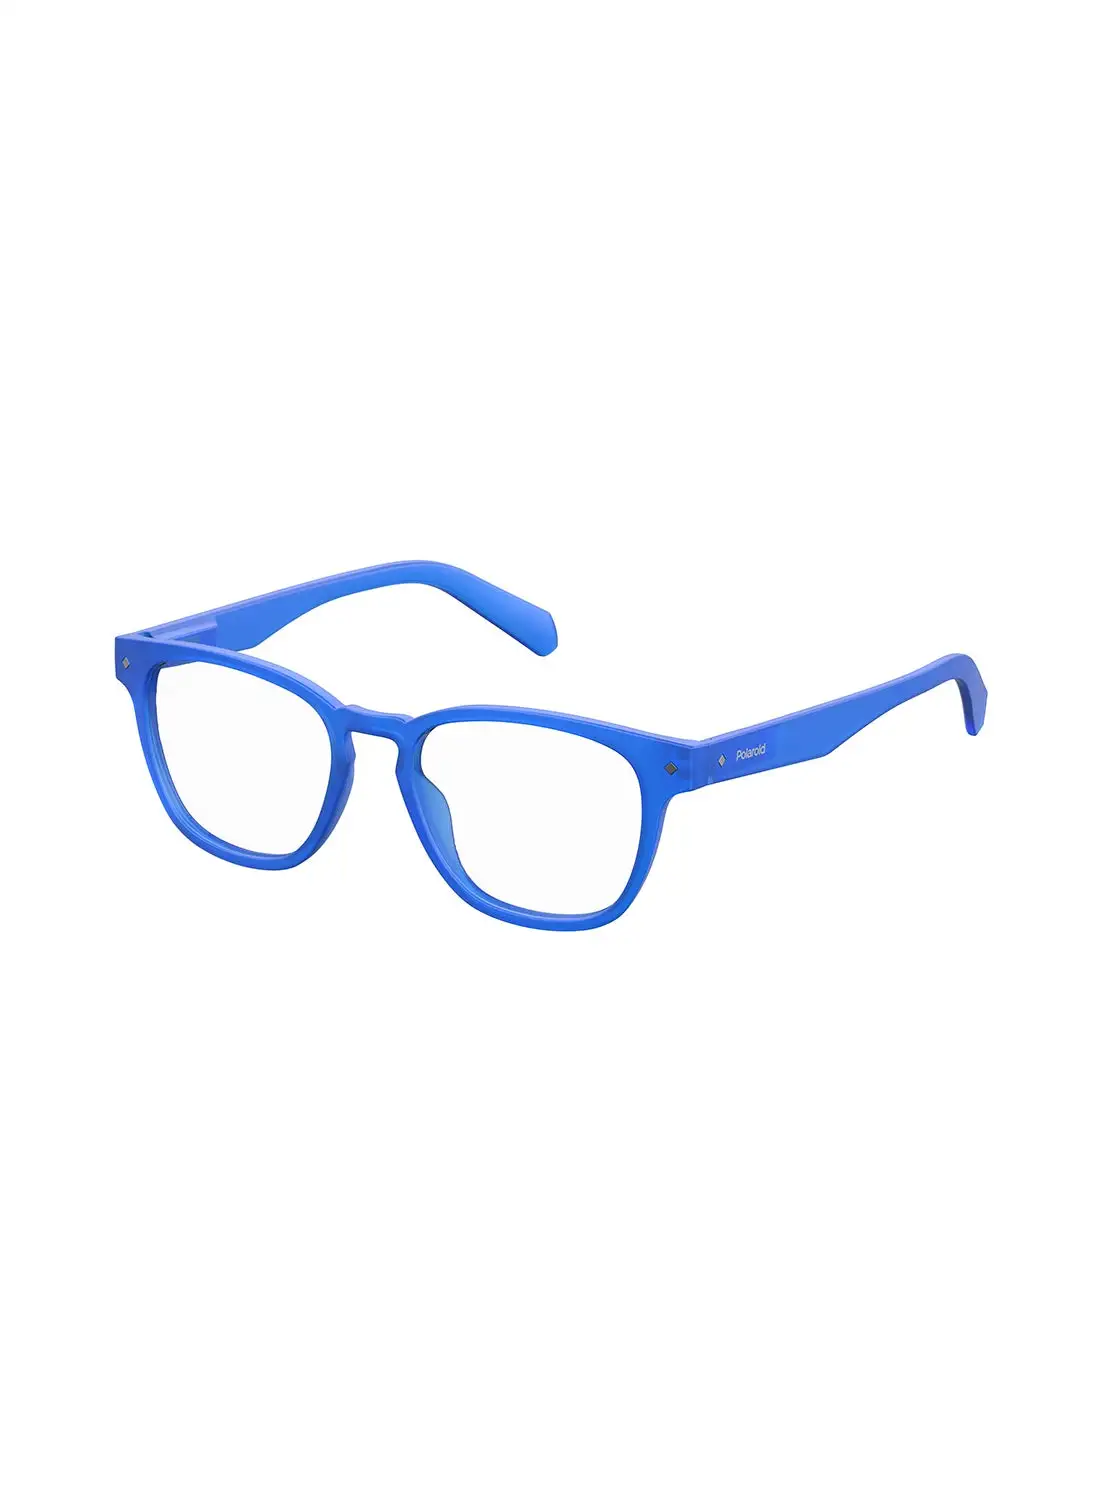 Polaroid Unisex Square Reading Glasses - Pld 0022/R Blue 50 - Lens Size: 50 Mm